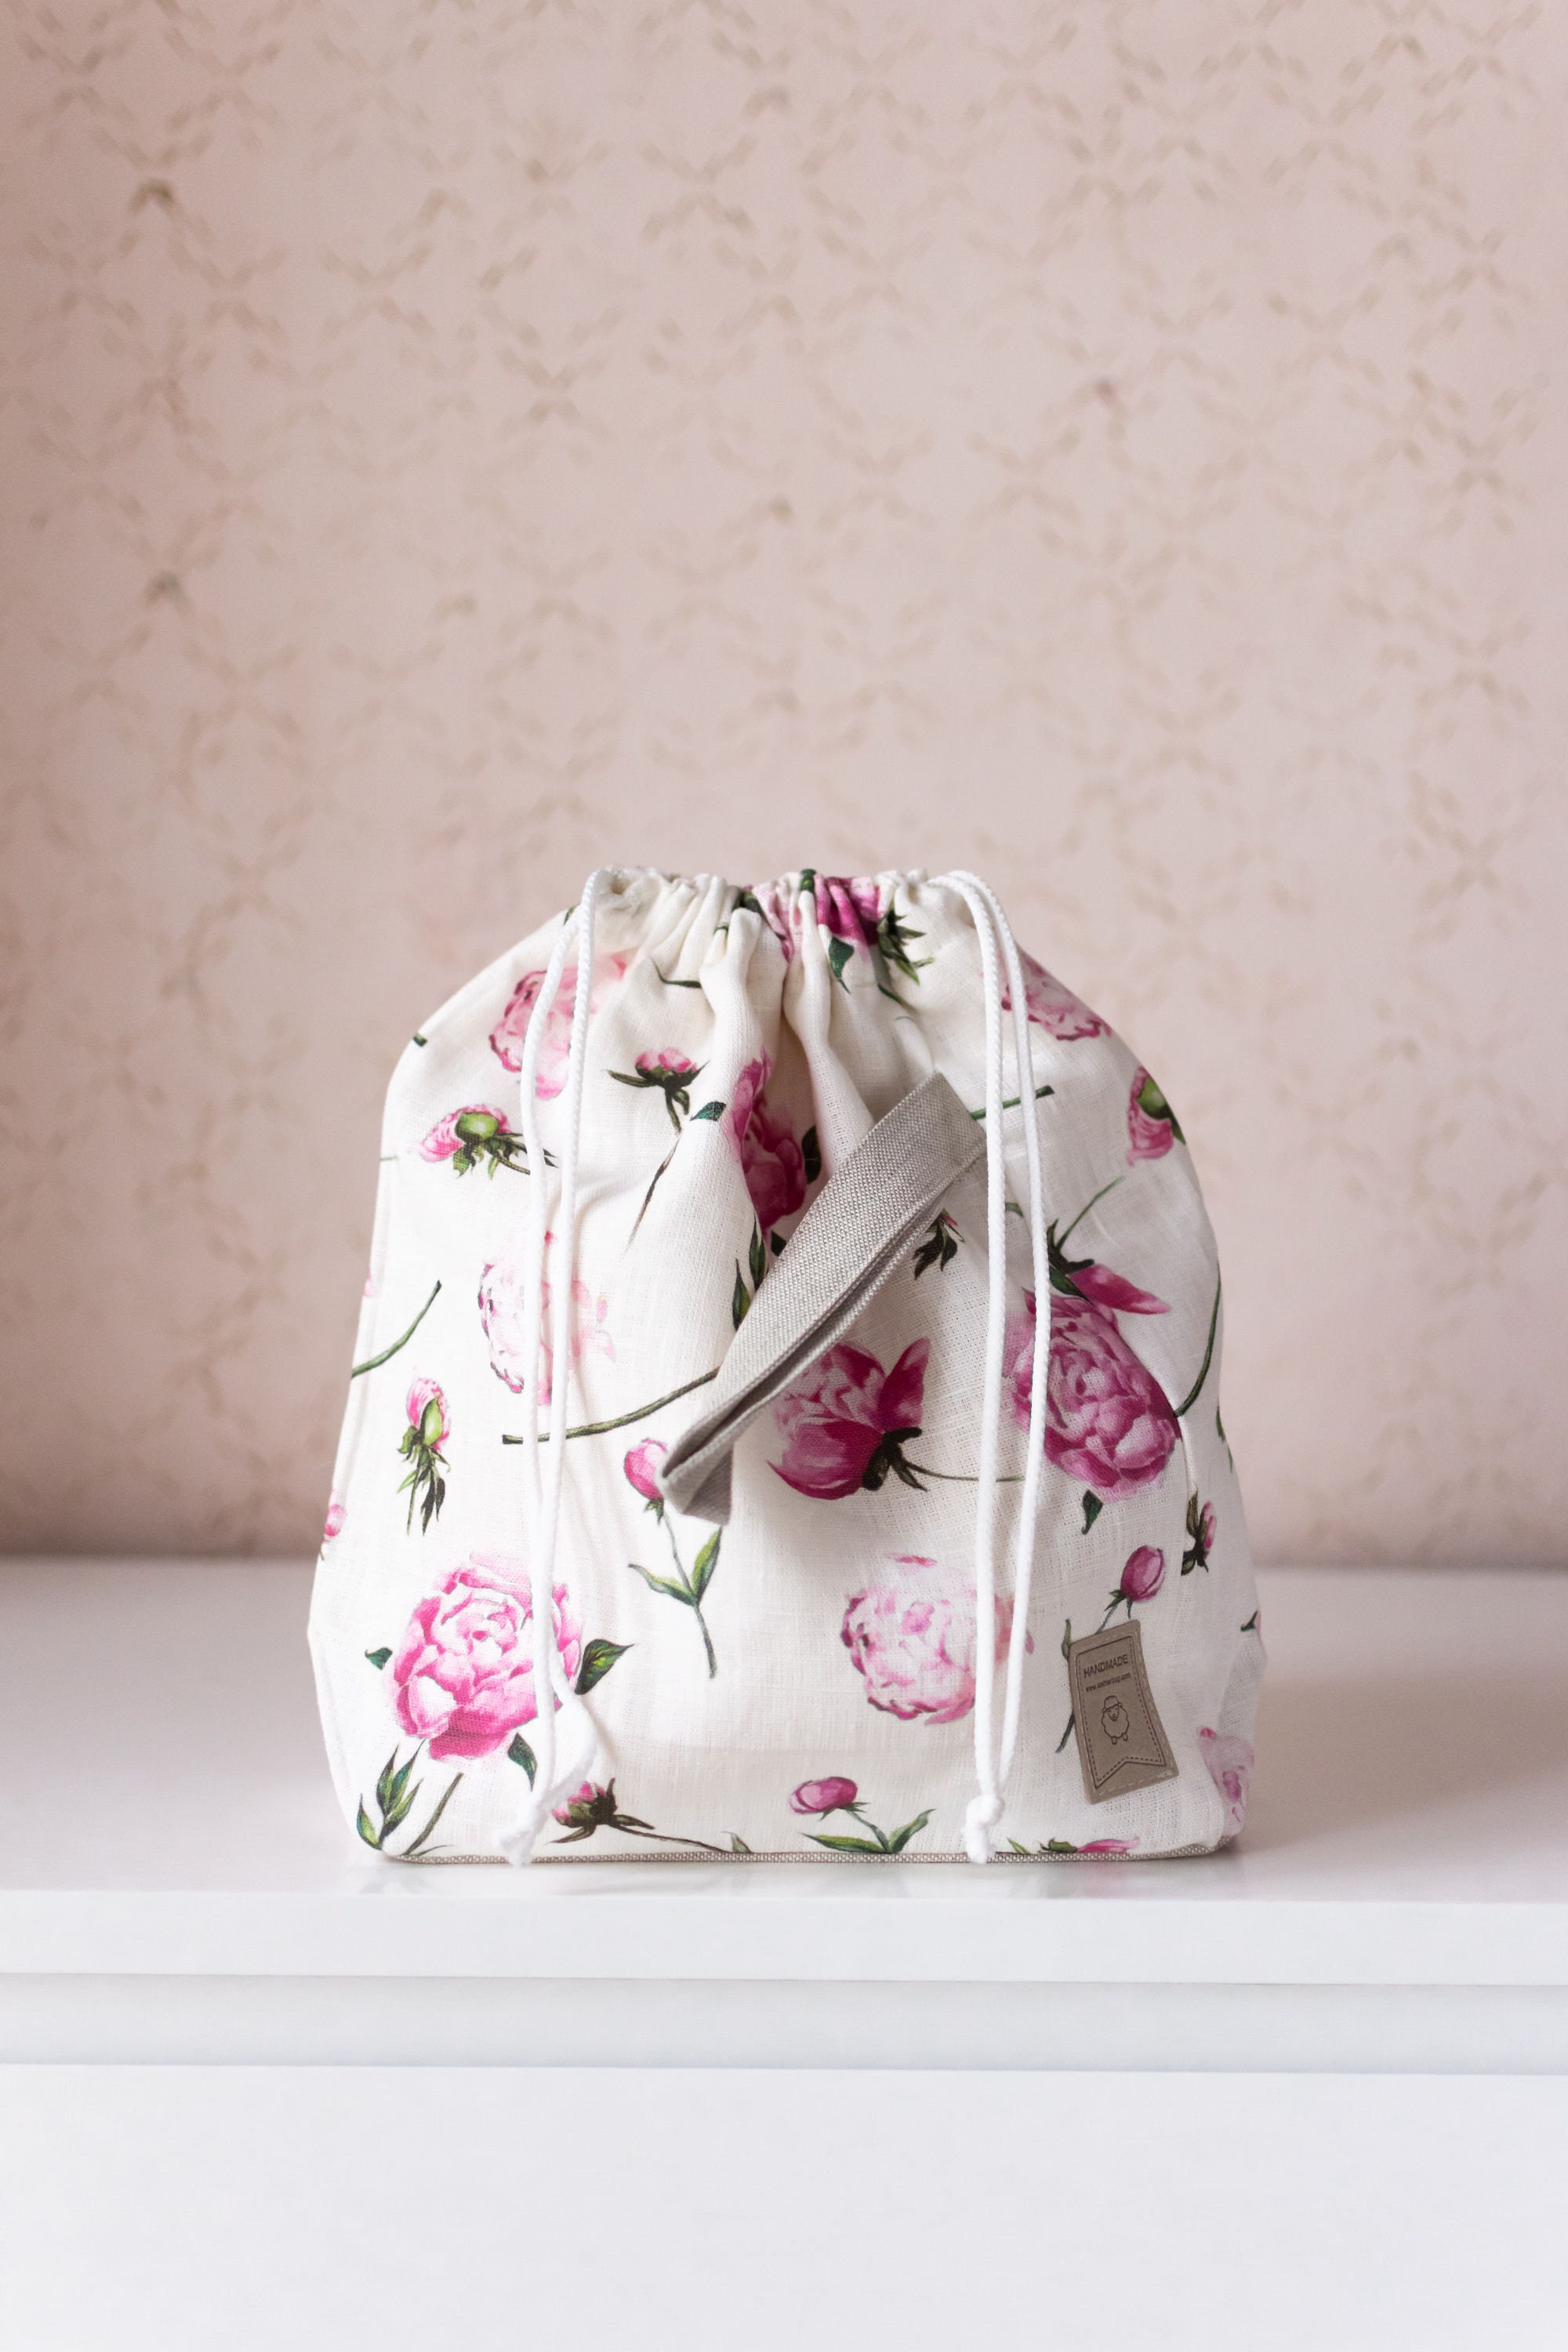 Peony Drawstring Knitting Project Bag. Large. Summer Flowers | Etsy